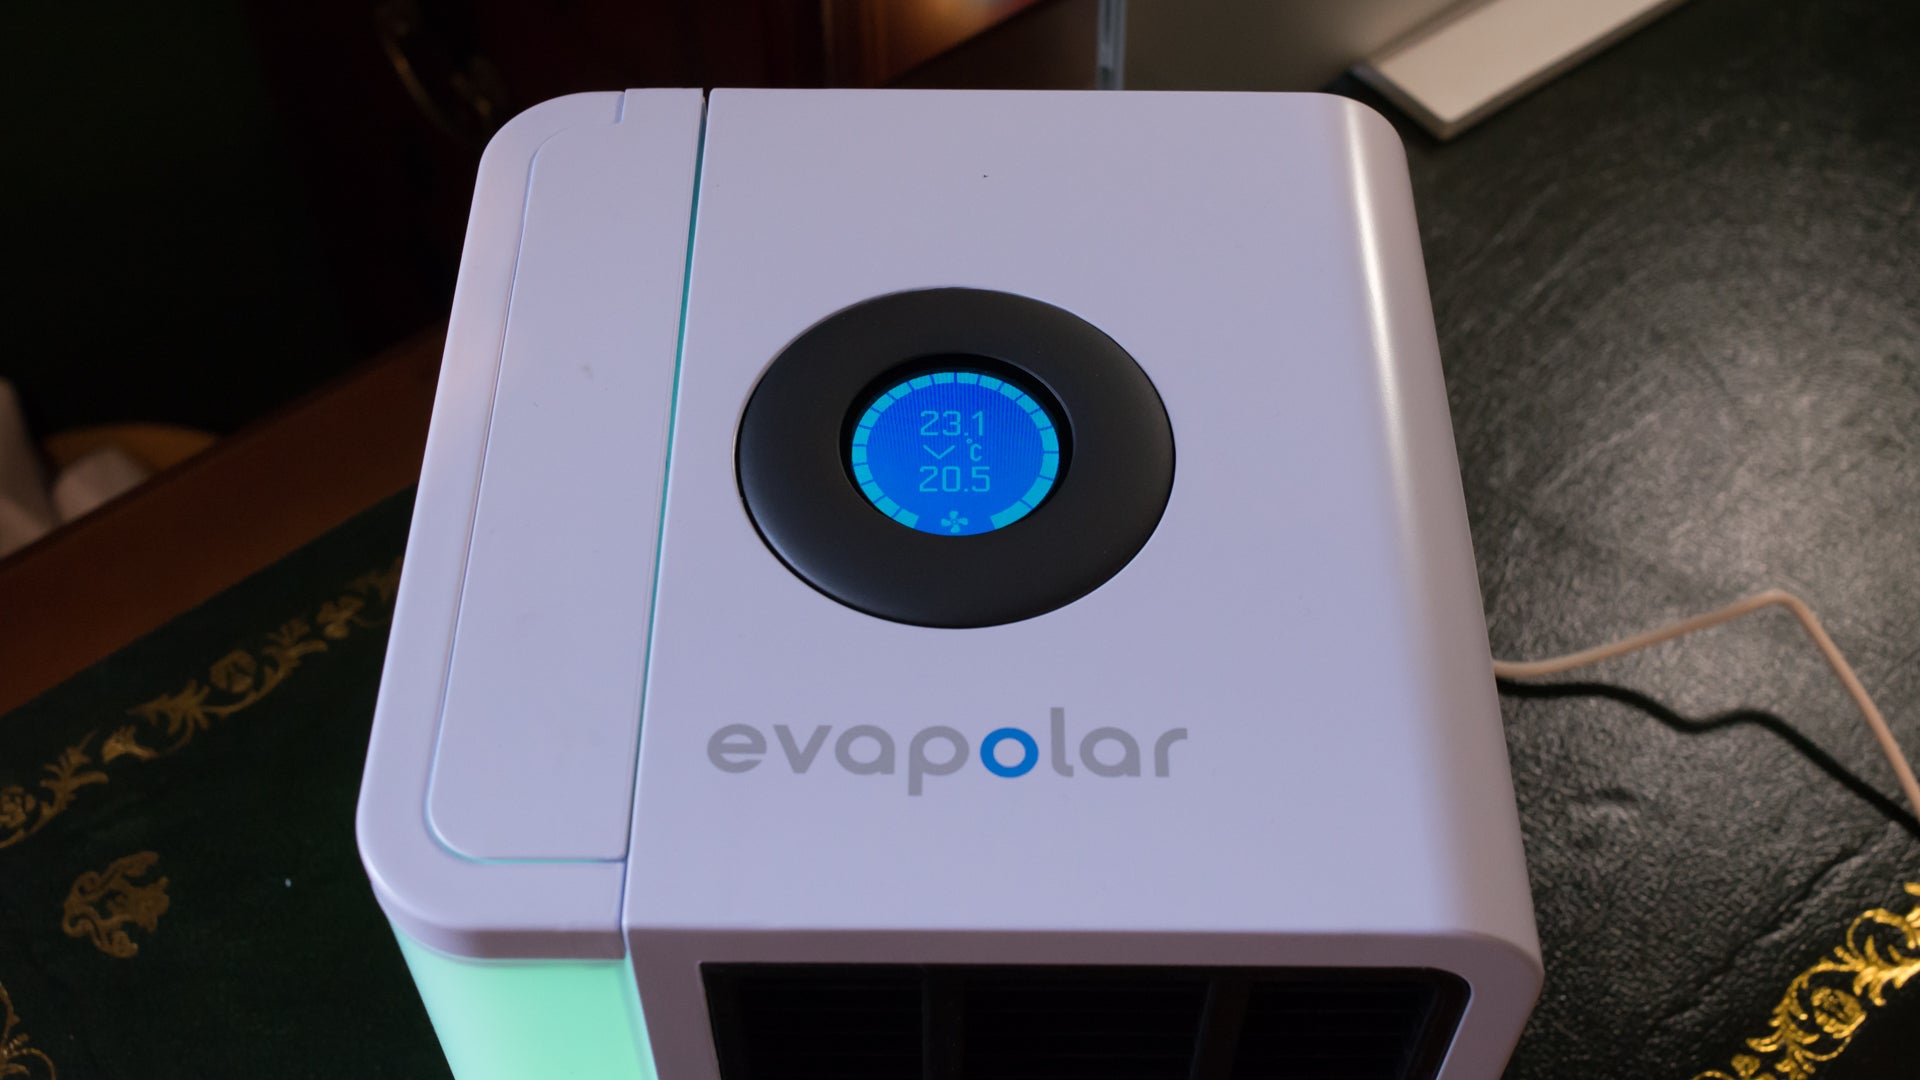 Evapolar personal air cooler with digital temperature display.